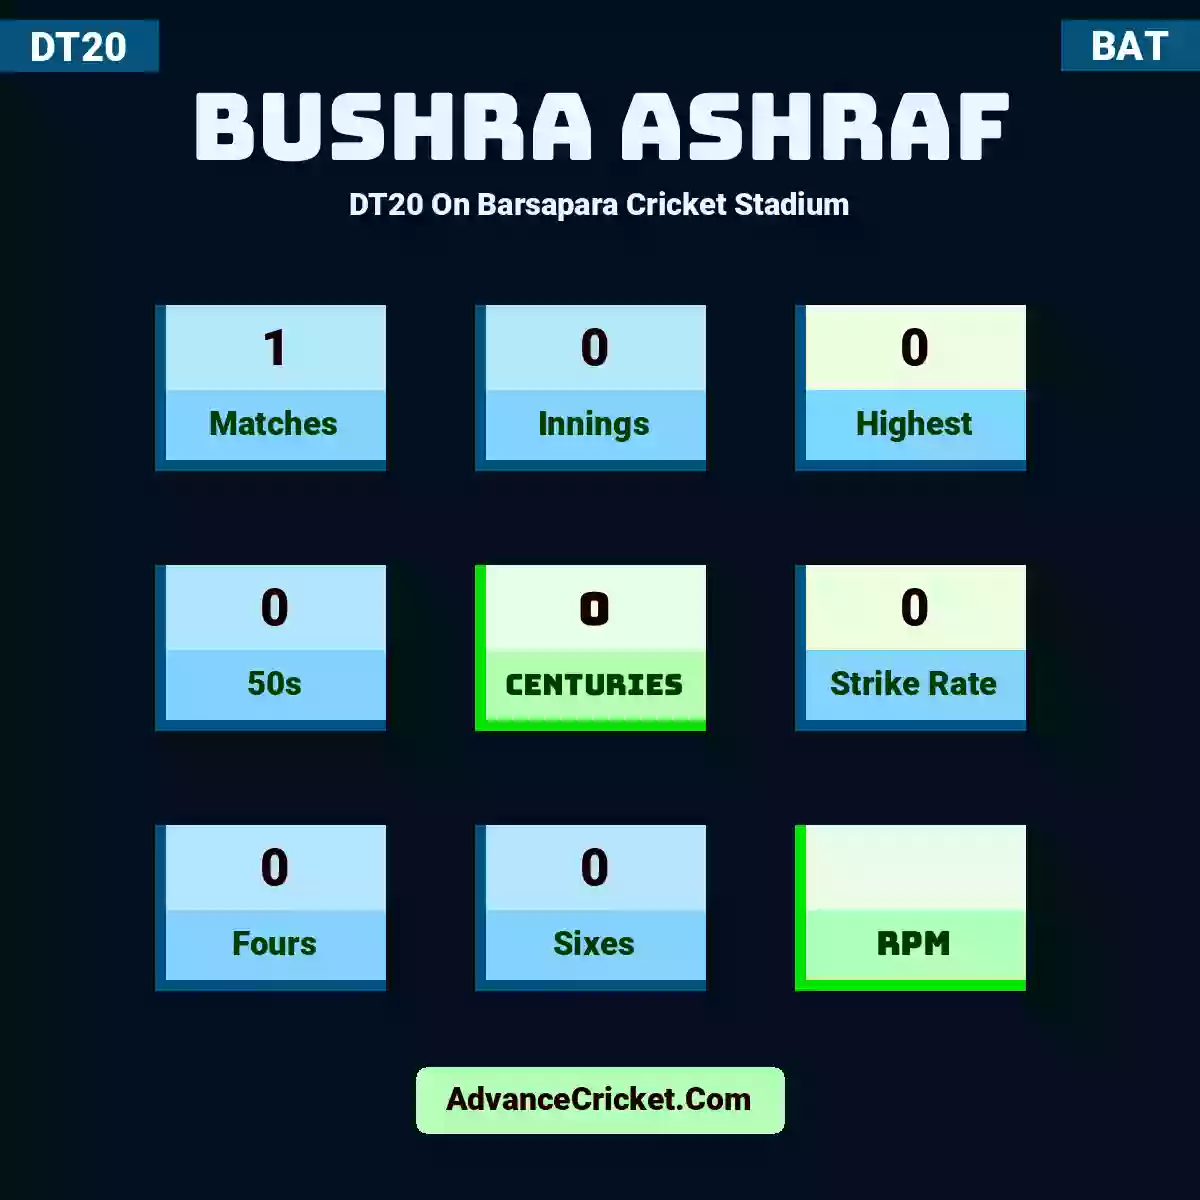 Bushra Ashraf DT20  On Barsapara Cricket Stadium, Bushra Ashraf played 1 matches, scored 0 runs as highest, 0 half-centuries, and 0 centuries, with a strike rate of 0. B.Ashraf hit 0 fours and 0 sixes.